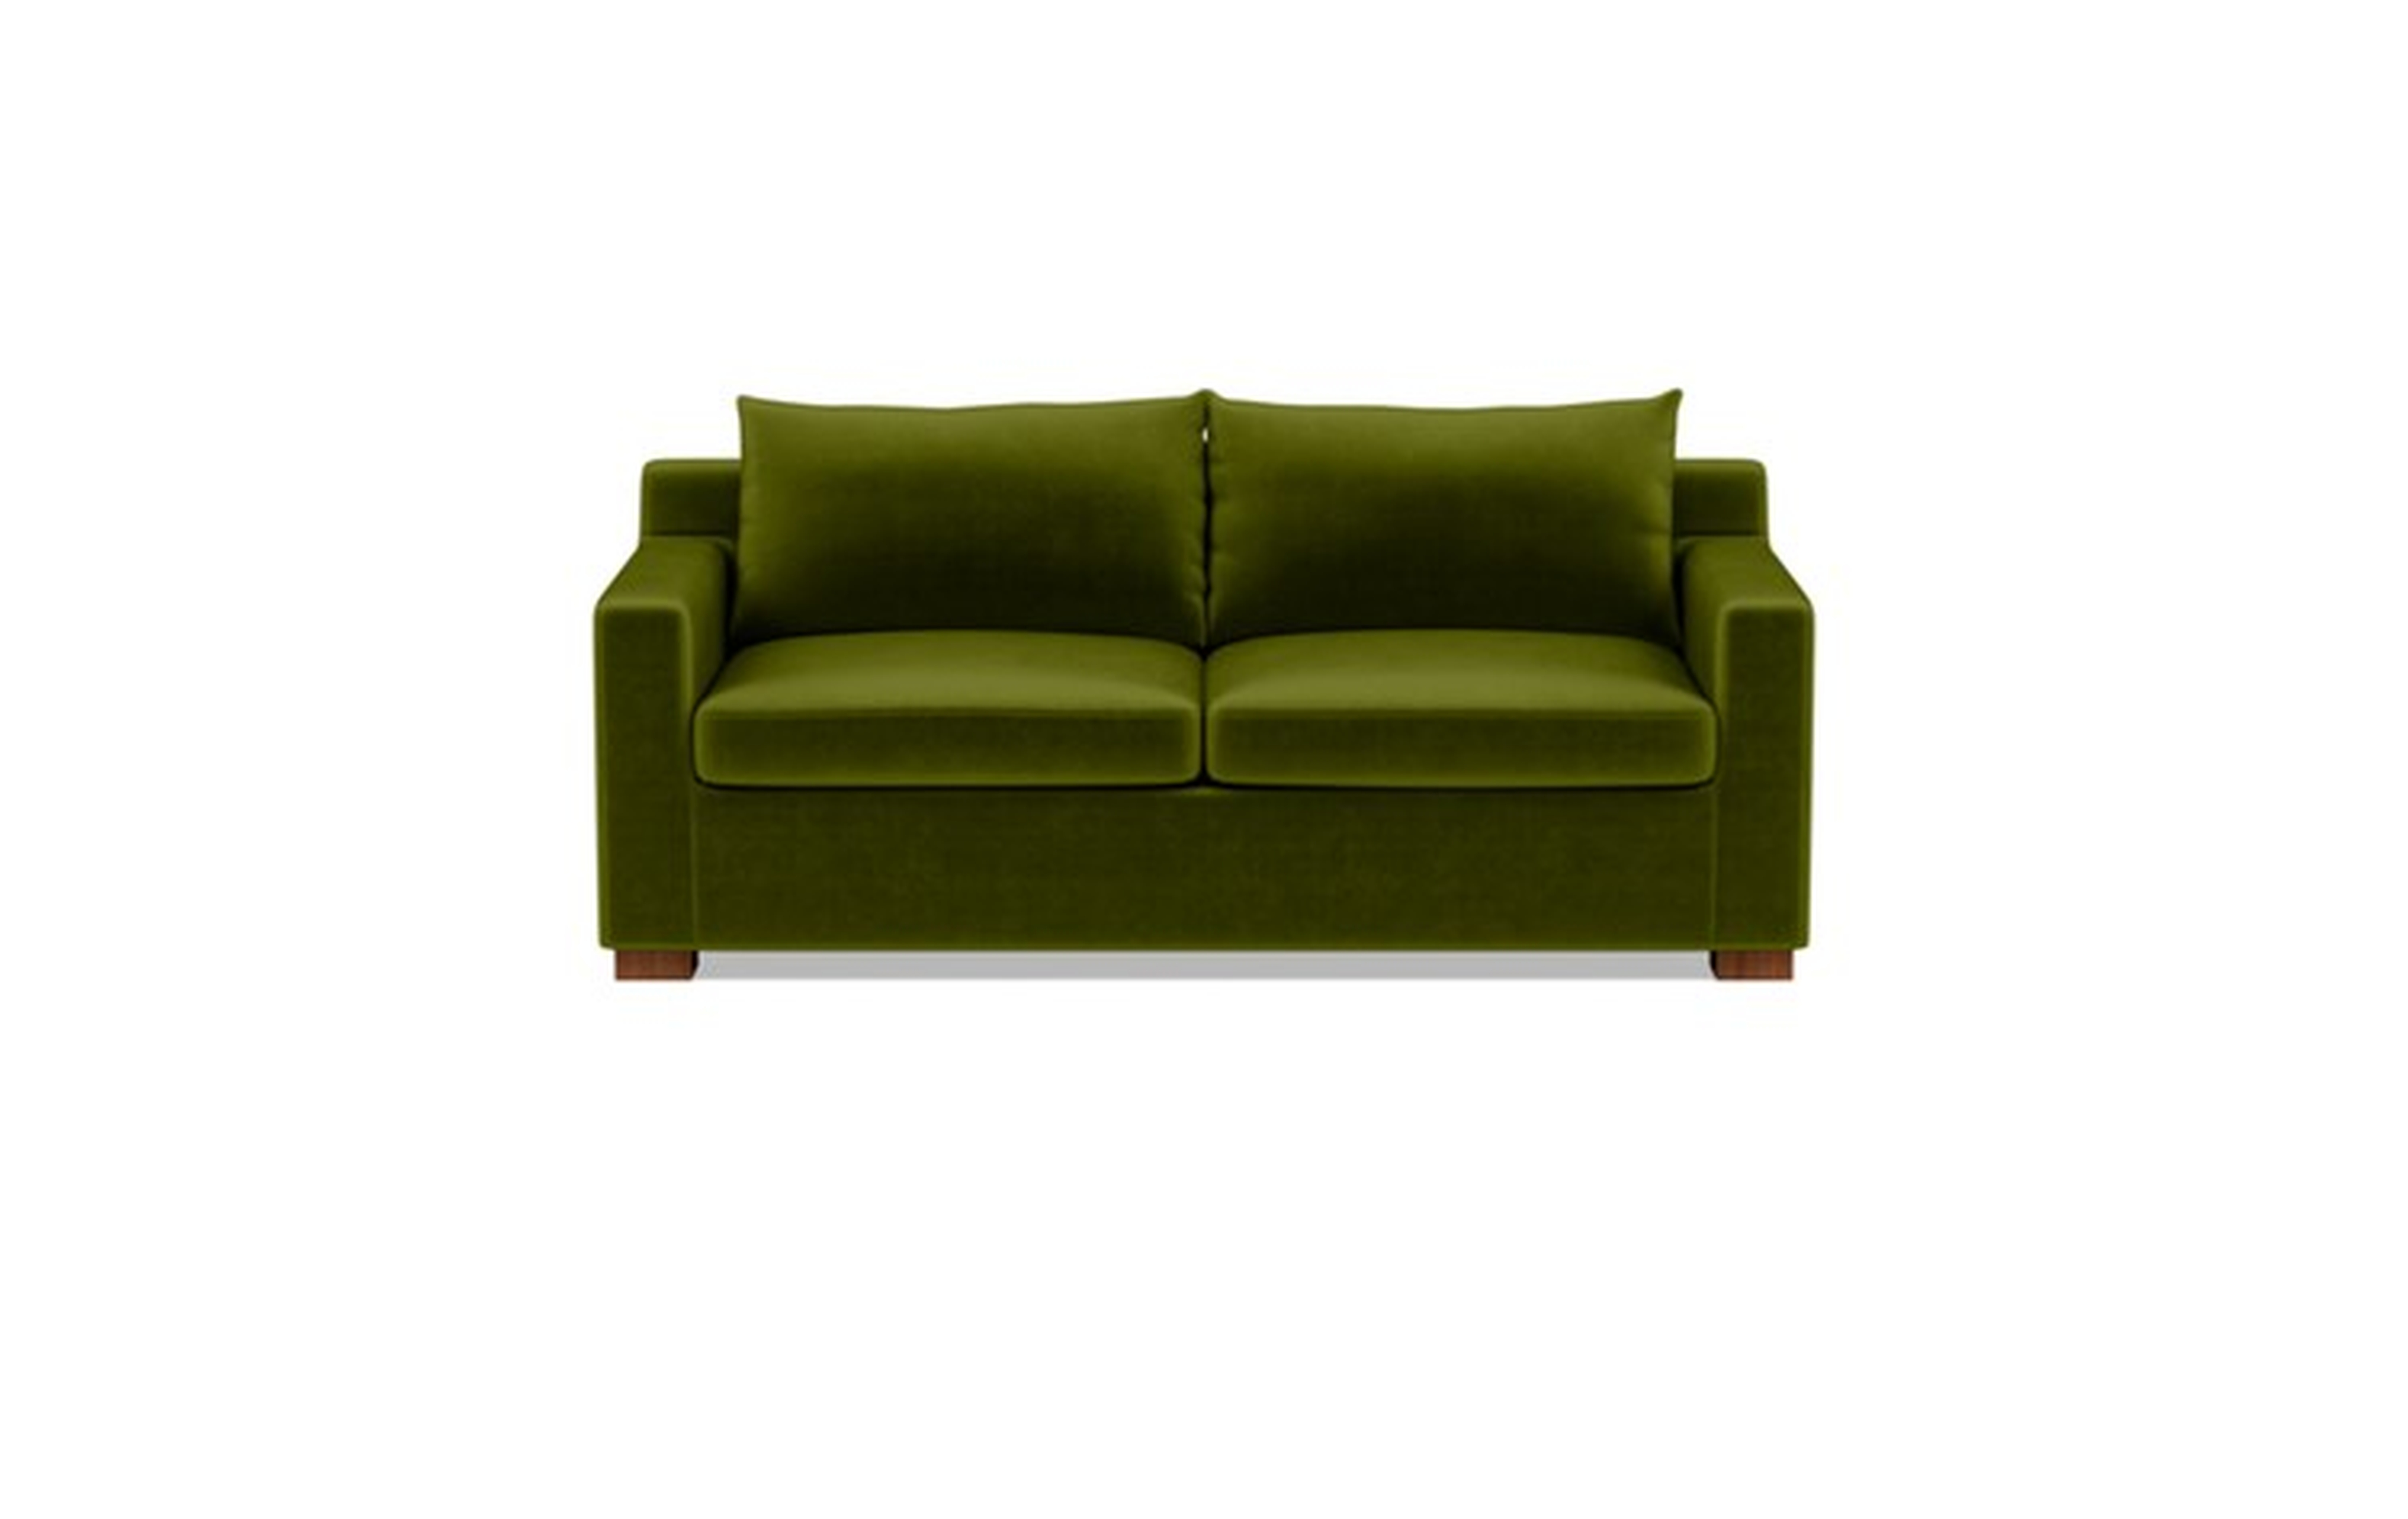 Sloan Sleeper Sleeper Sofa with Green Moss Fabric, down alternative cushions, and Oiled Walnut legs - Interior Define